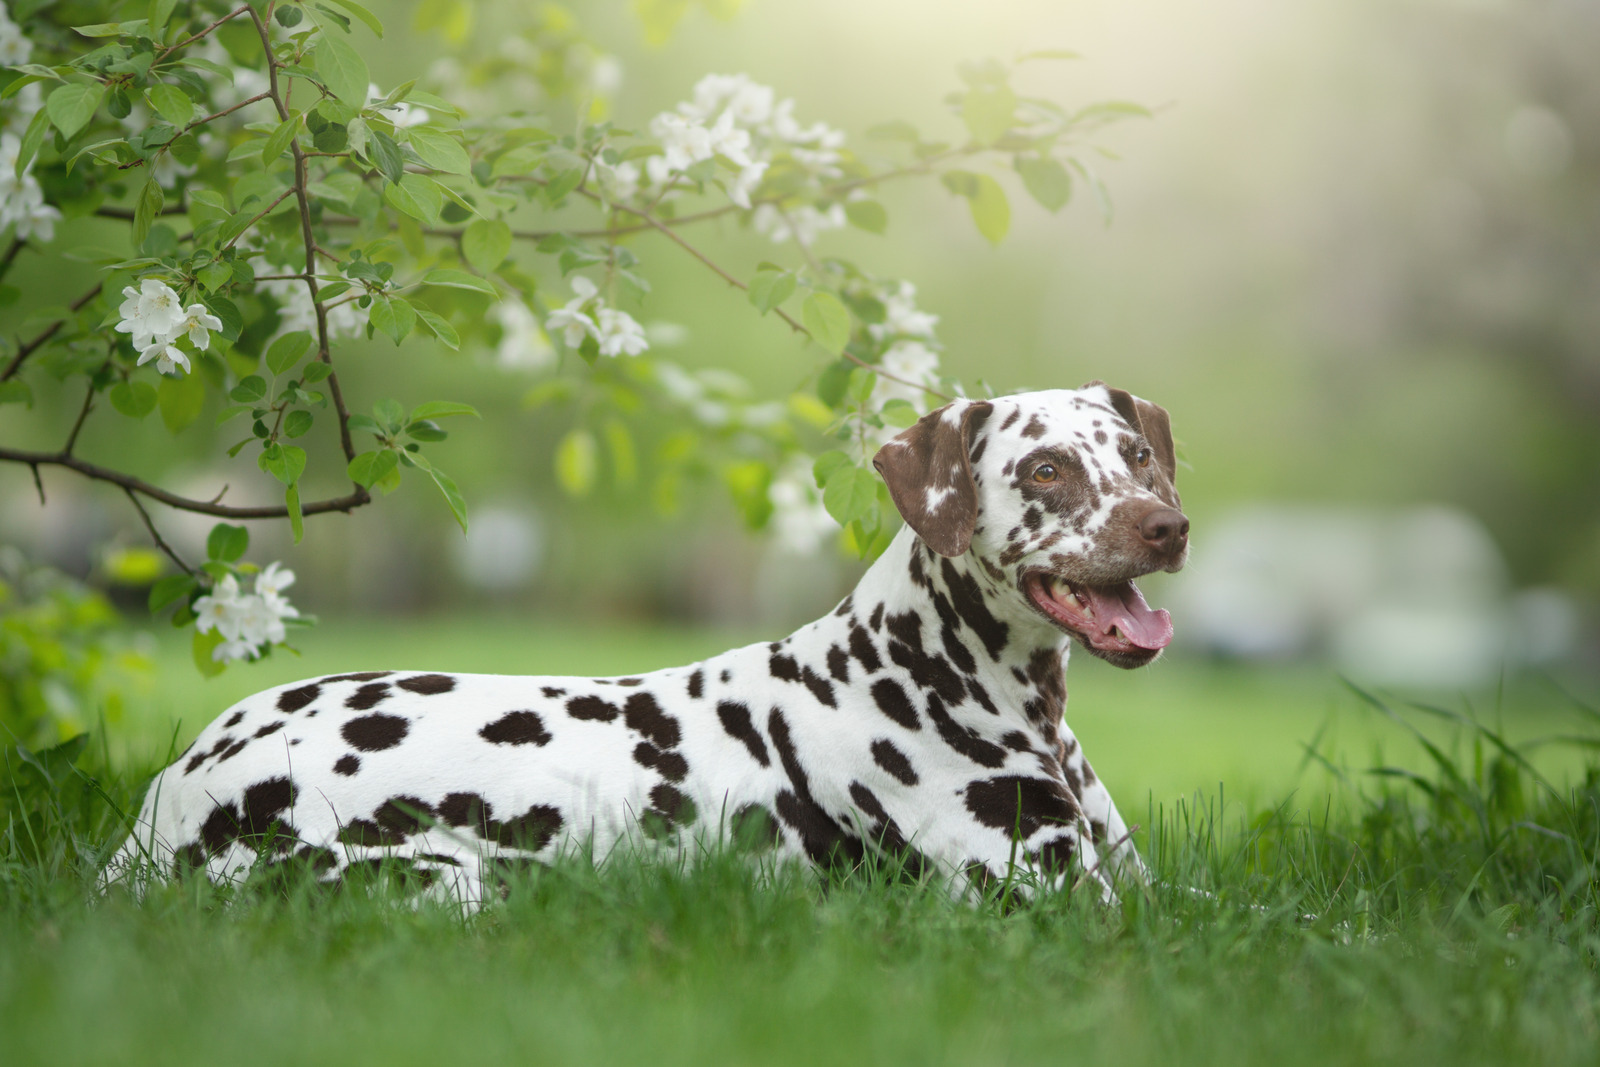 Europees hondenras dalmatier ligt in gras onder boom met bloesems